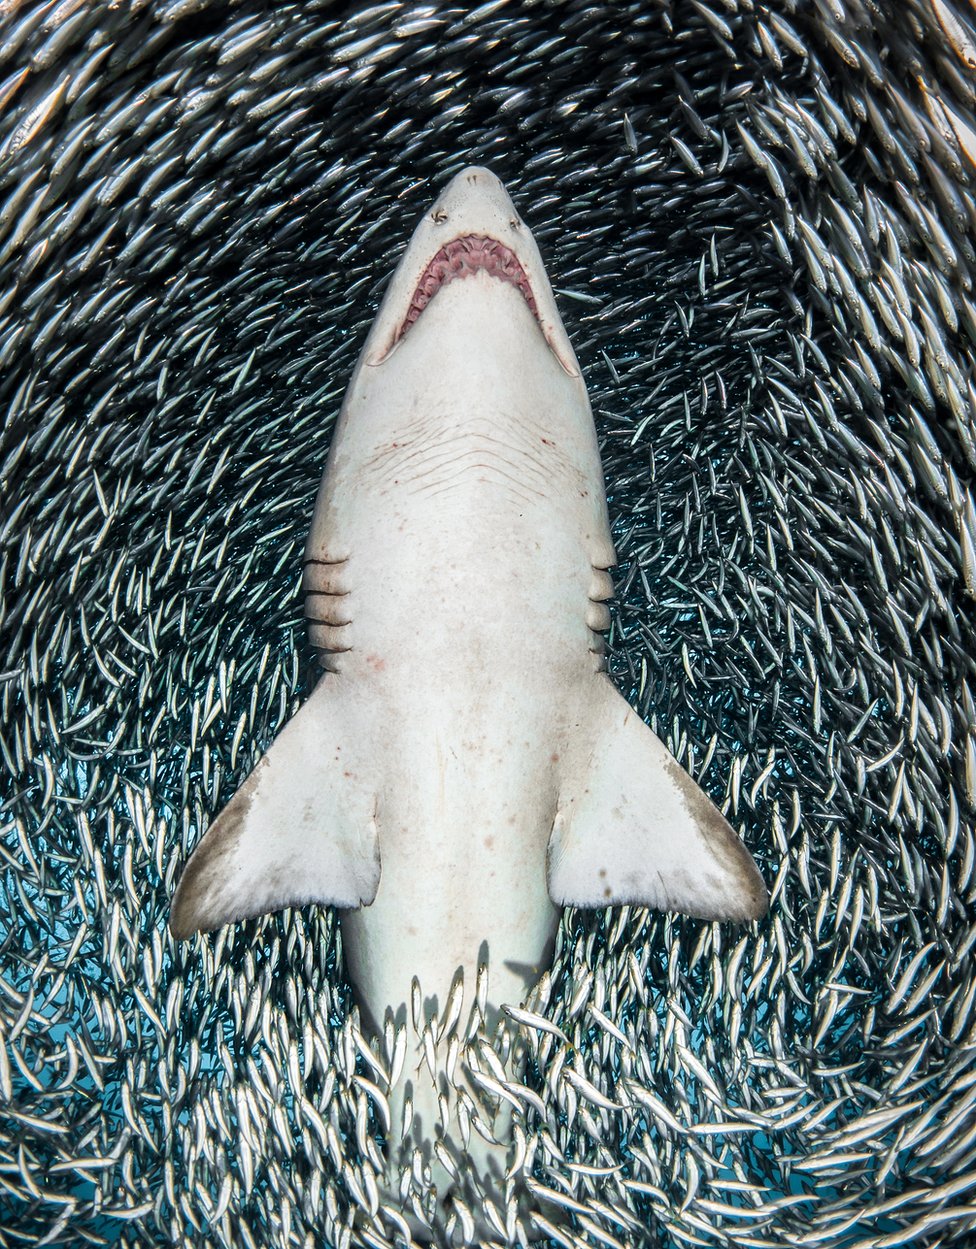 Tiburón tigre rodeado de peces